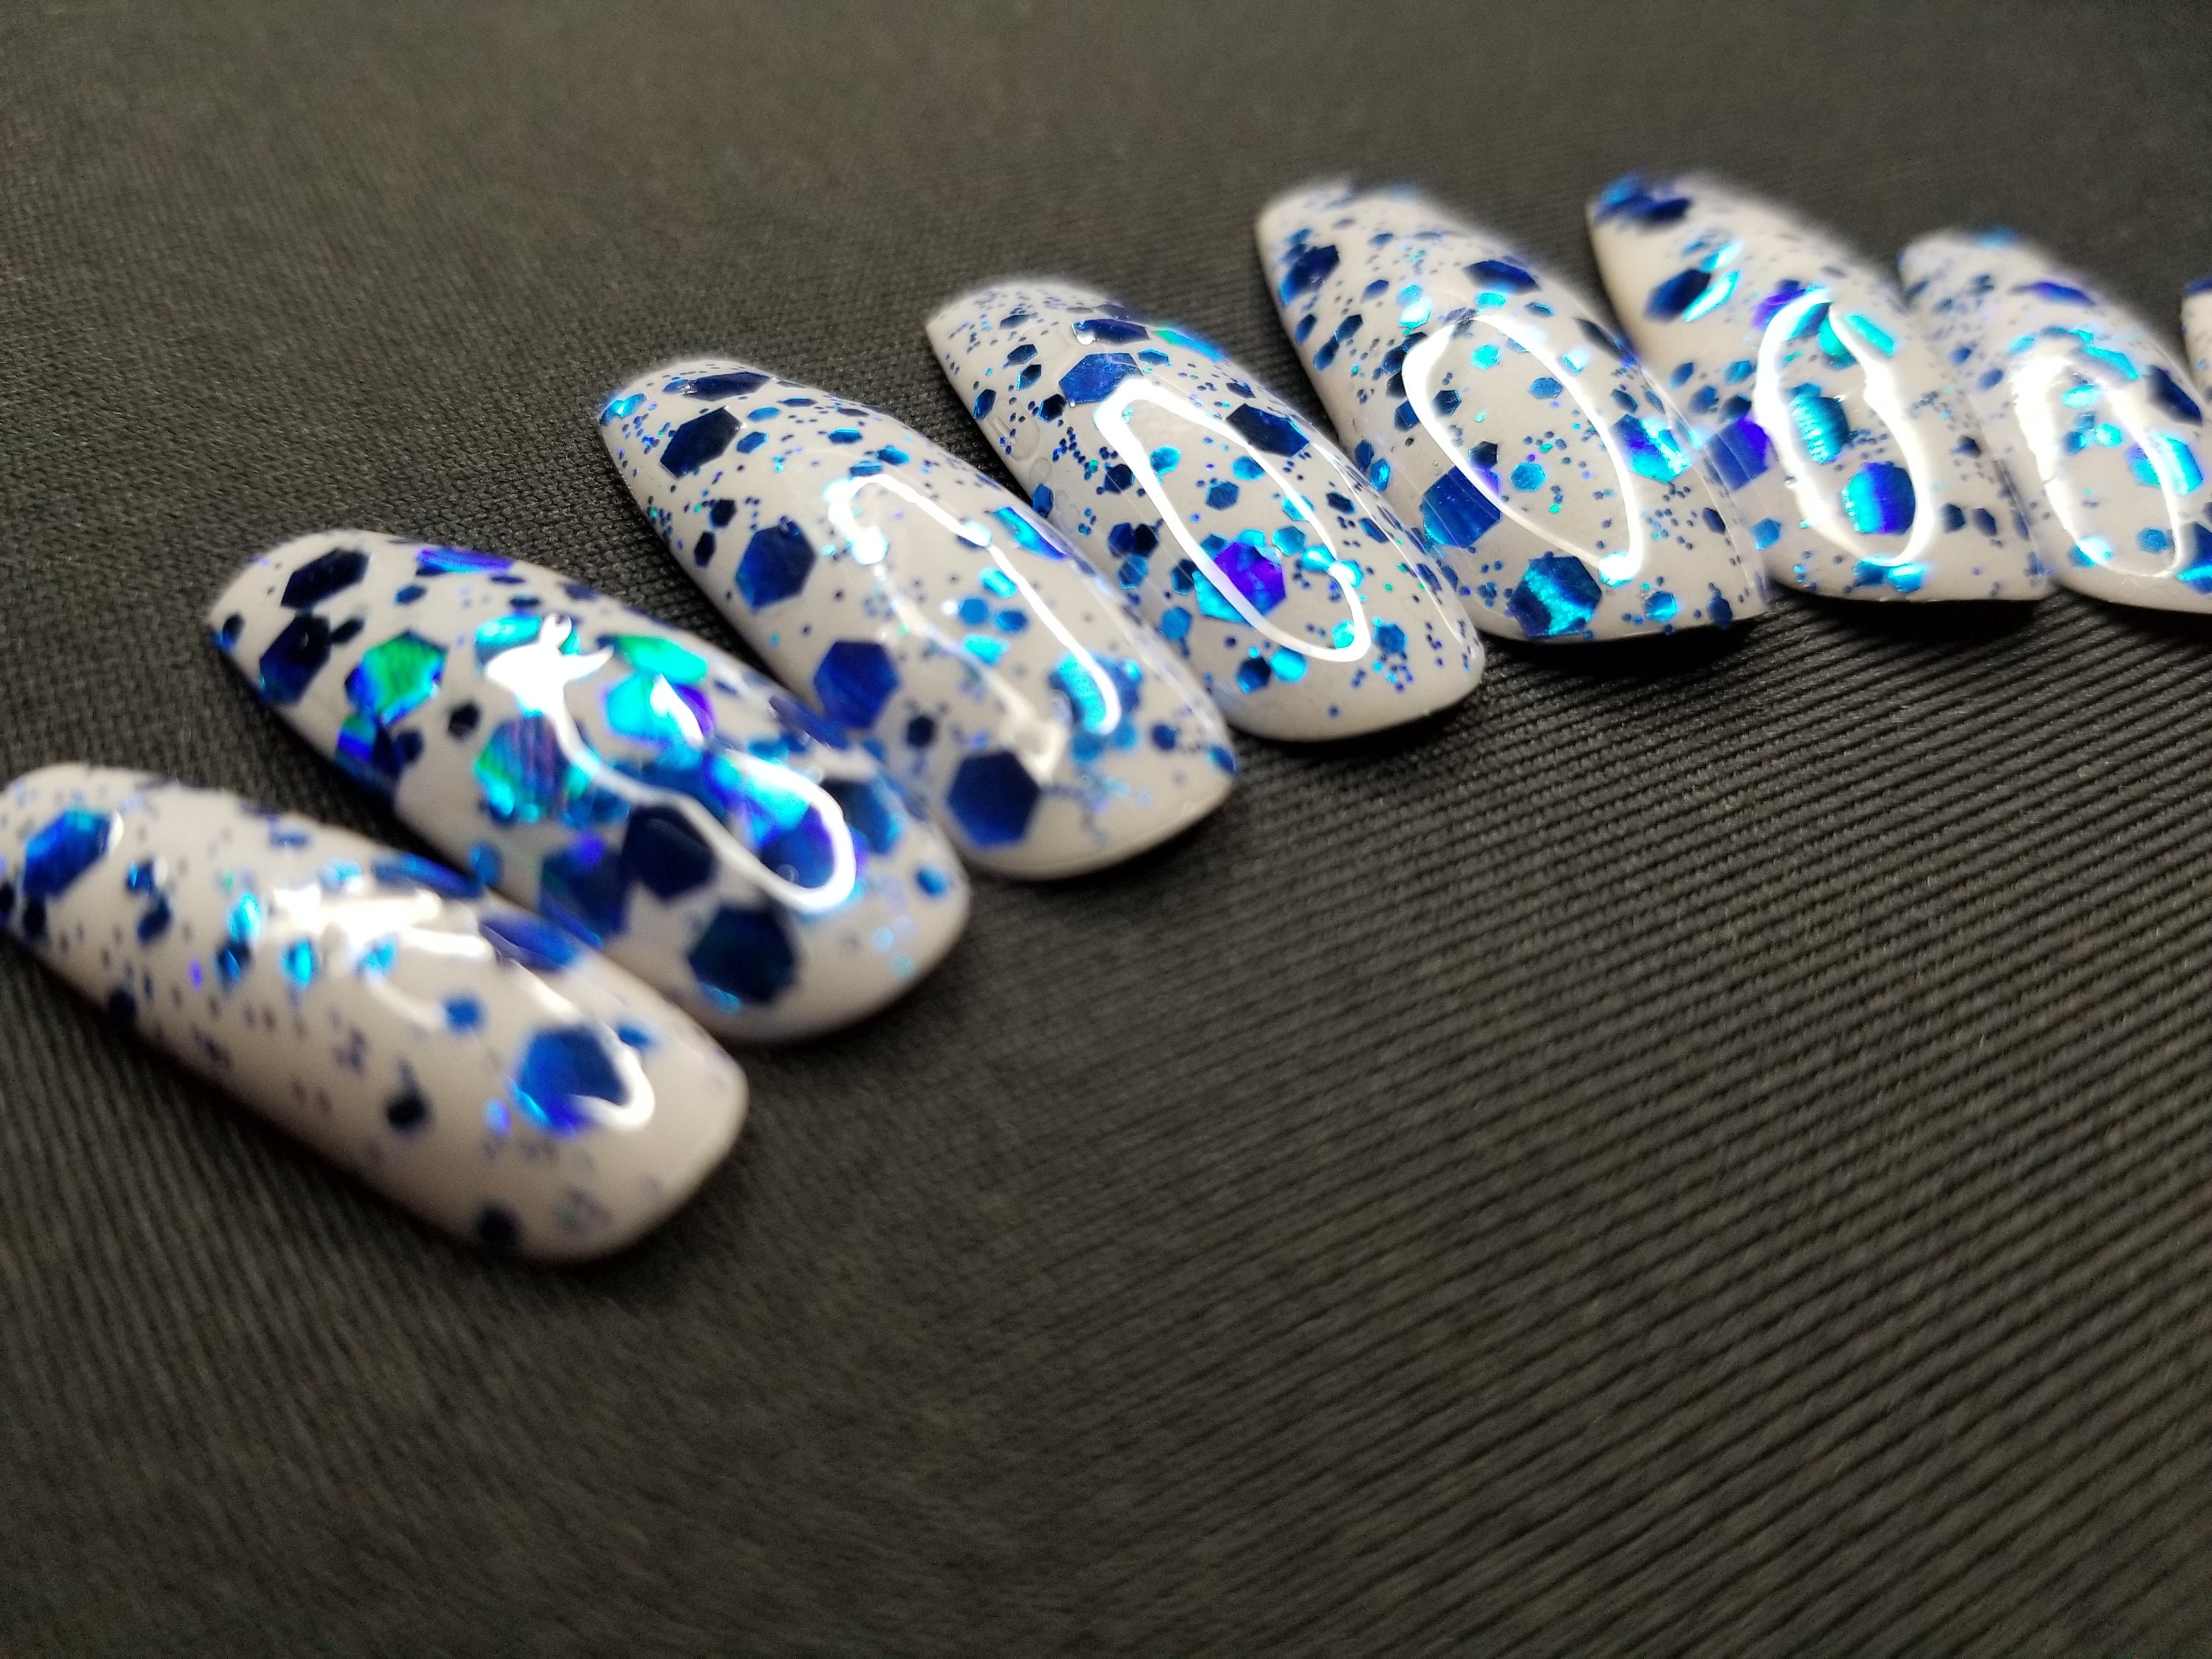 3. Blue Glitter Nails - wide 2